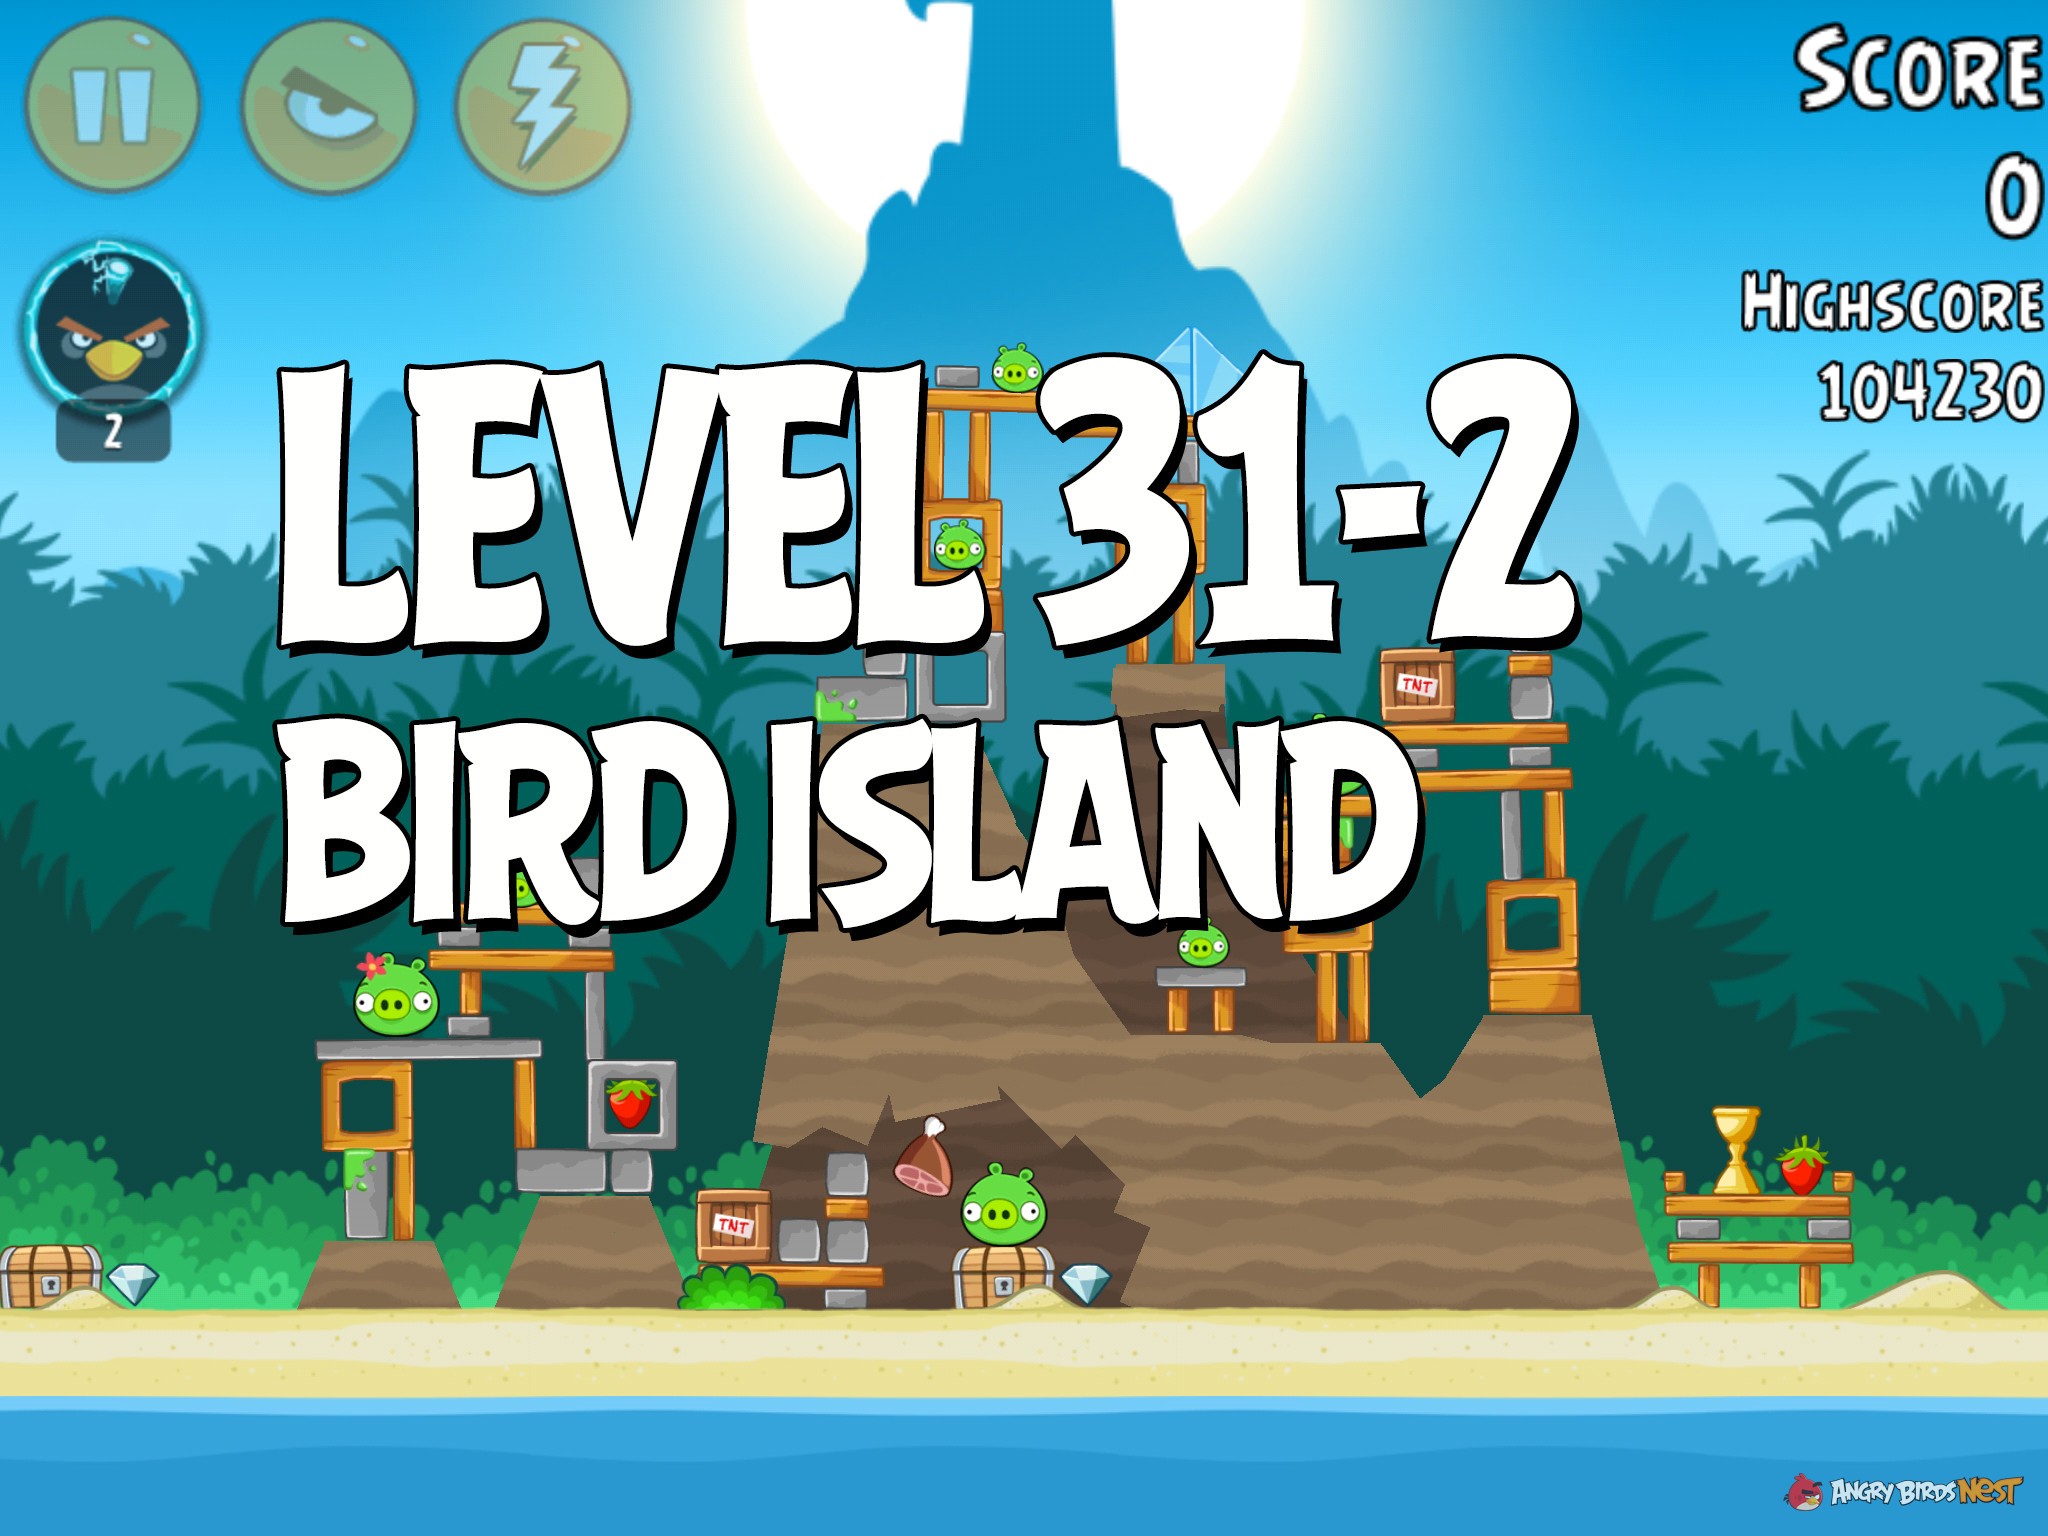 angry-birds-bird-island-level-31-2